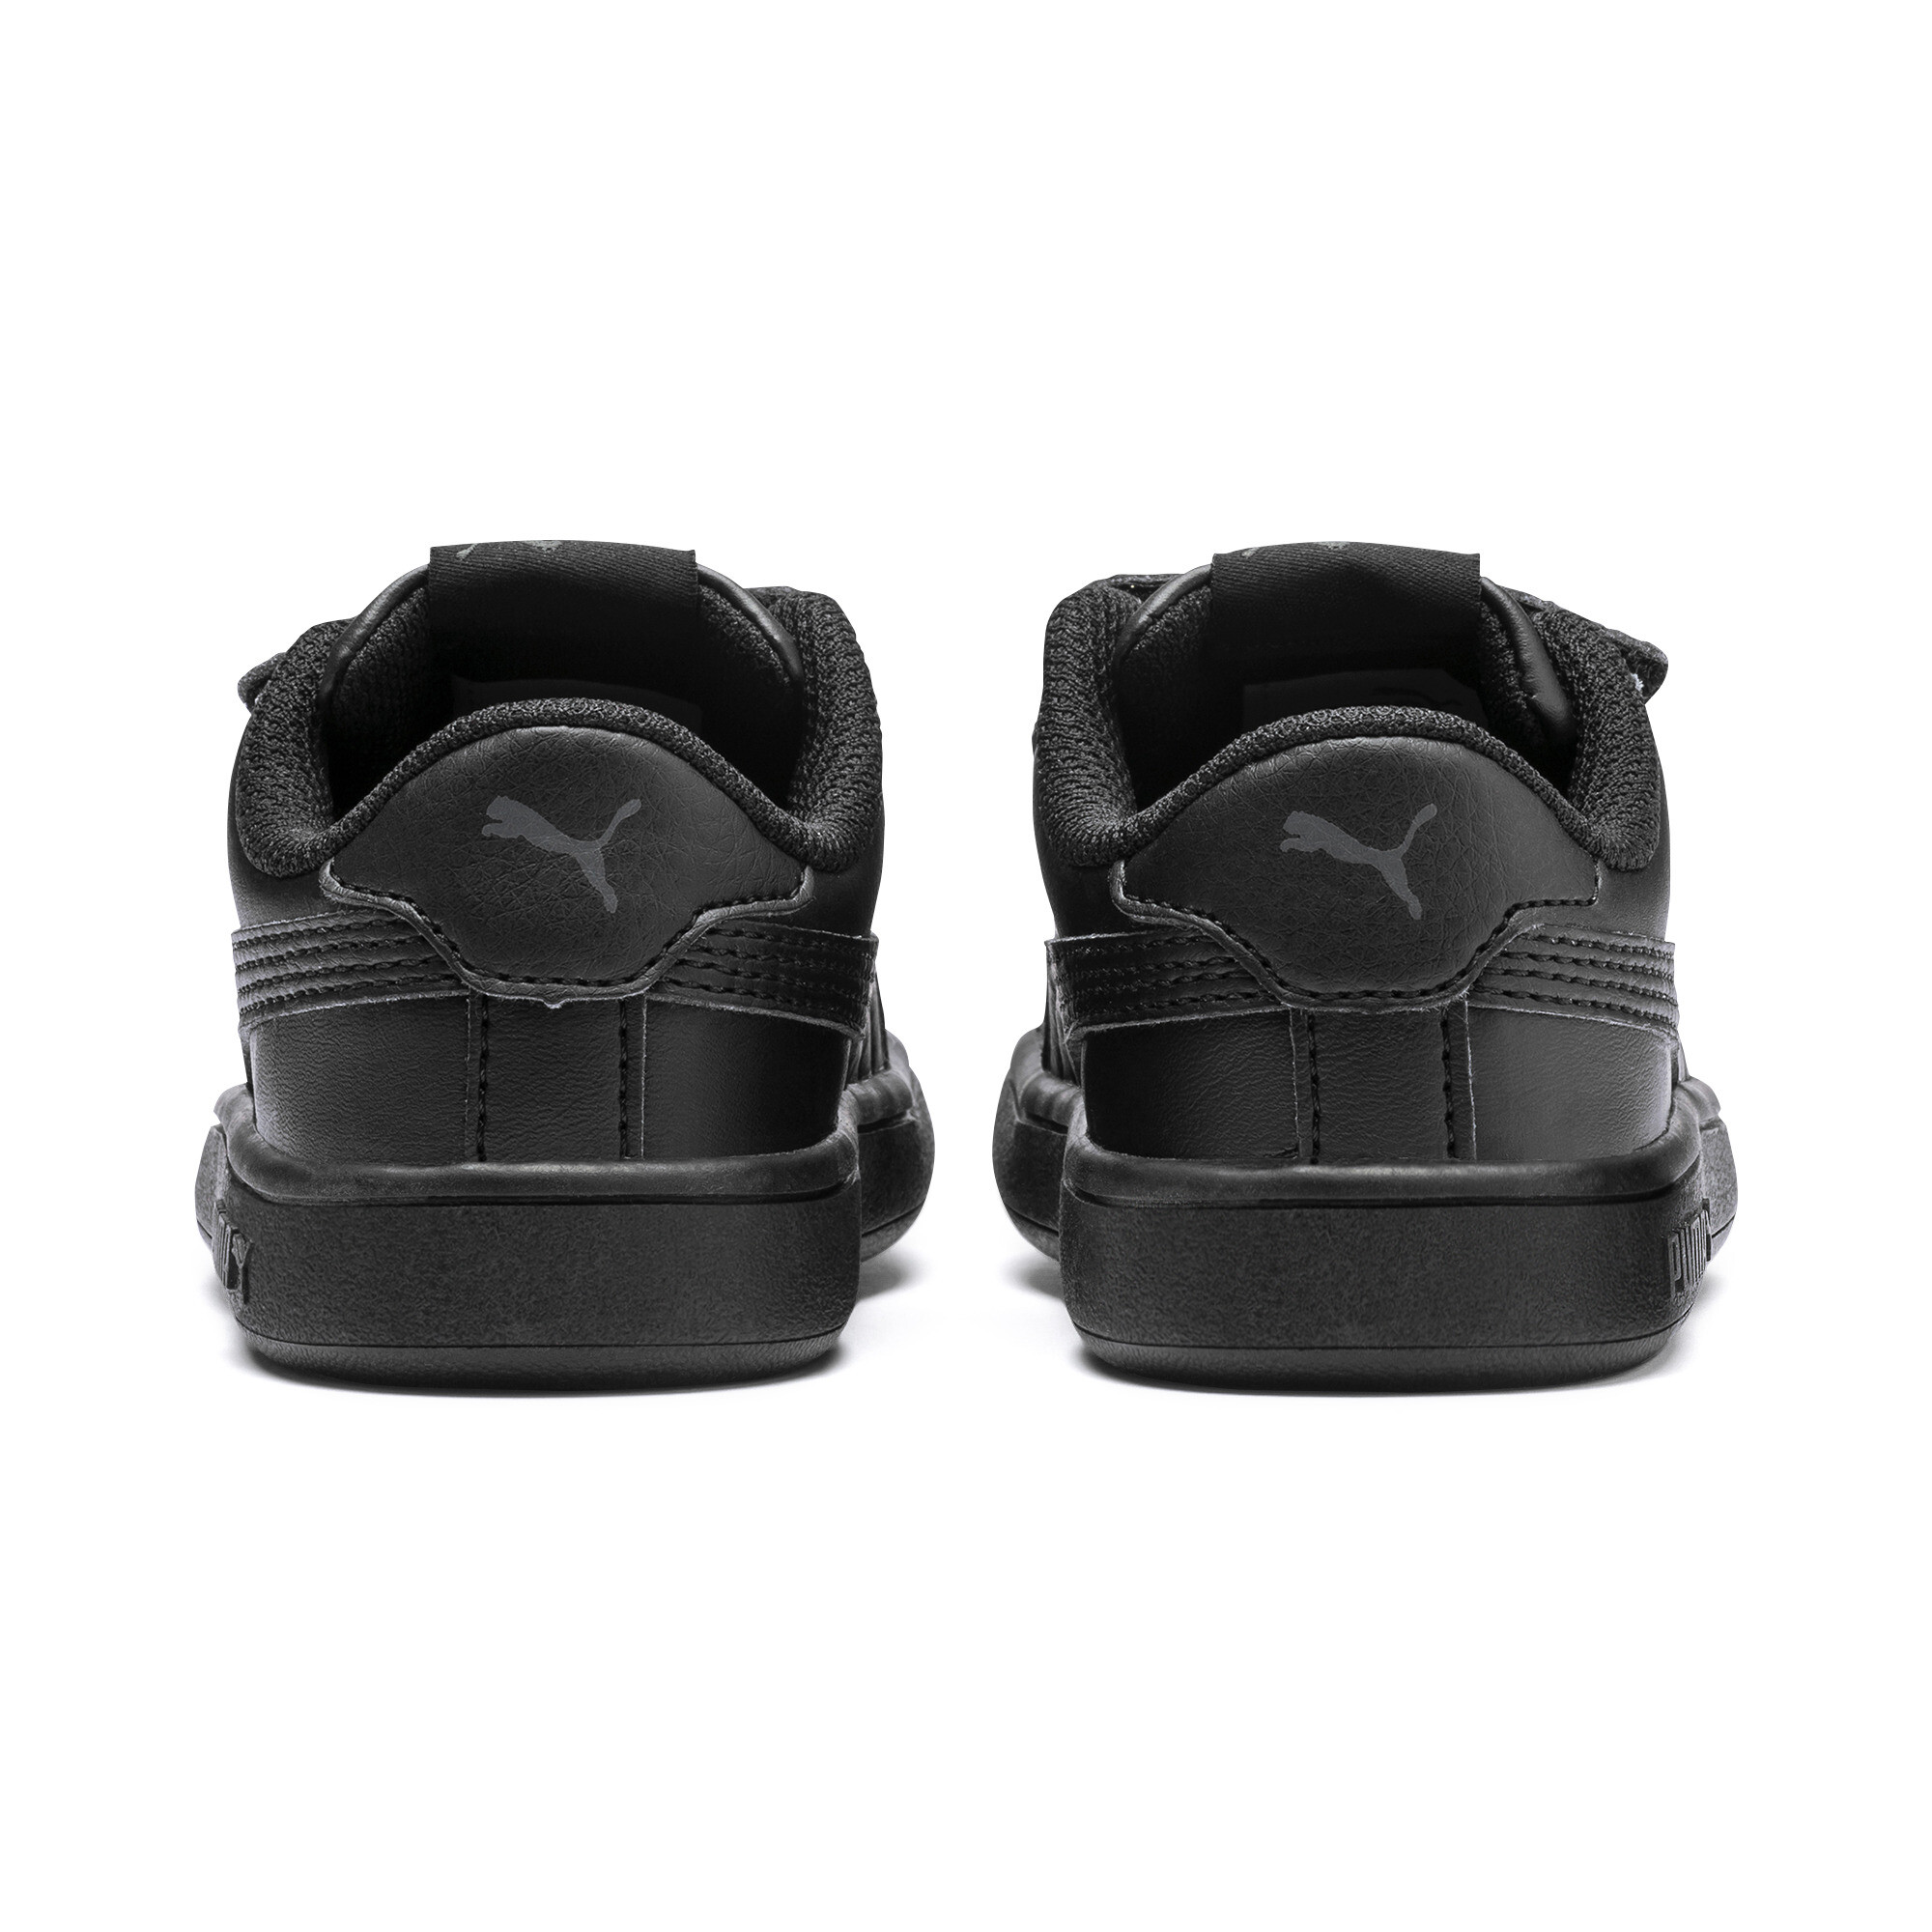 Kids' PUMA Smash V2 Trainers Shoes In Black, Size EU 19